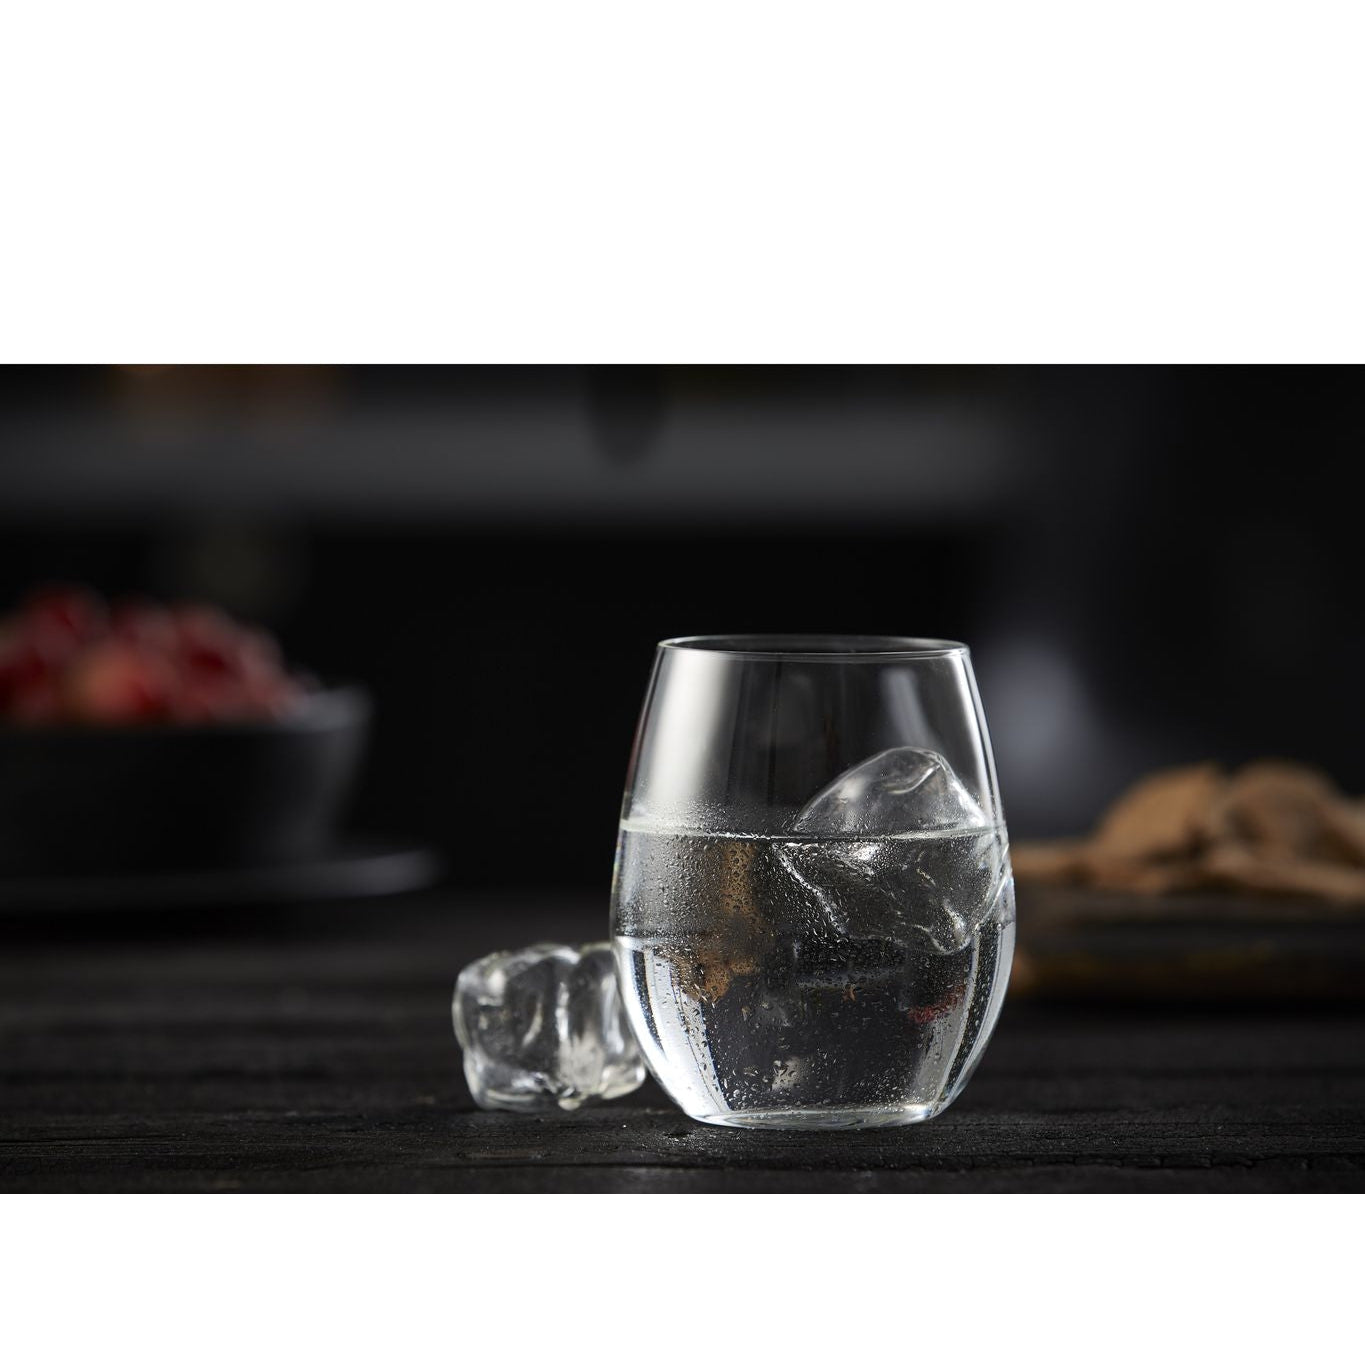 Lyngby Glas Juvel Wasserglas 39 Cl, 6 Stück.